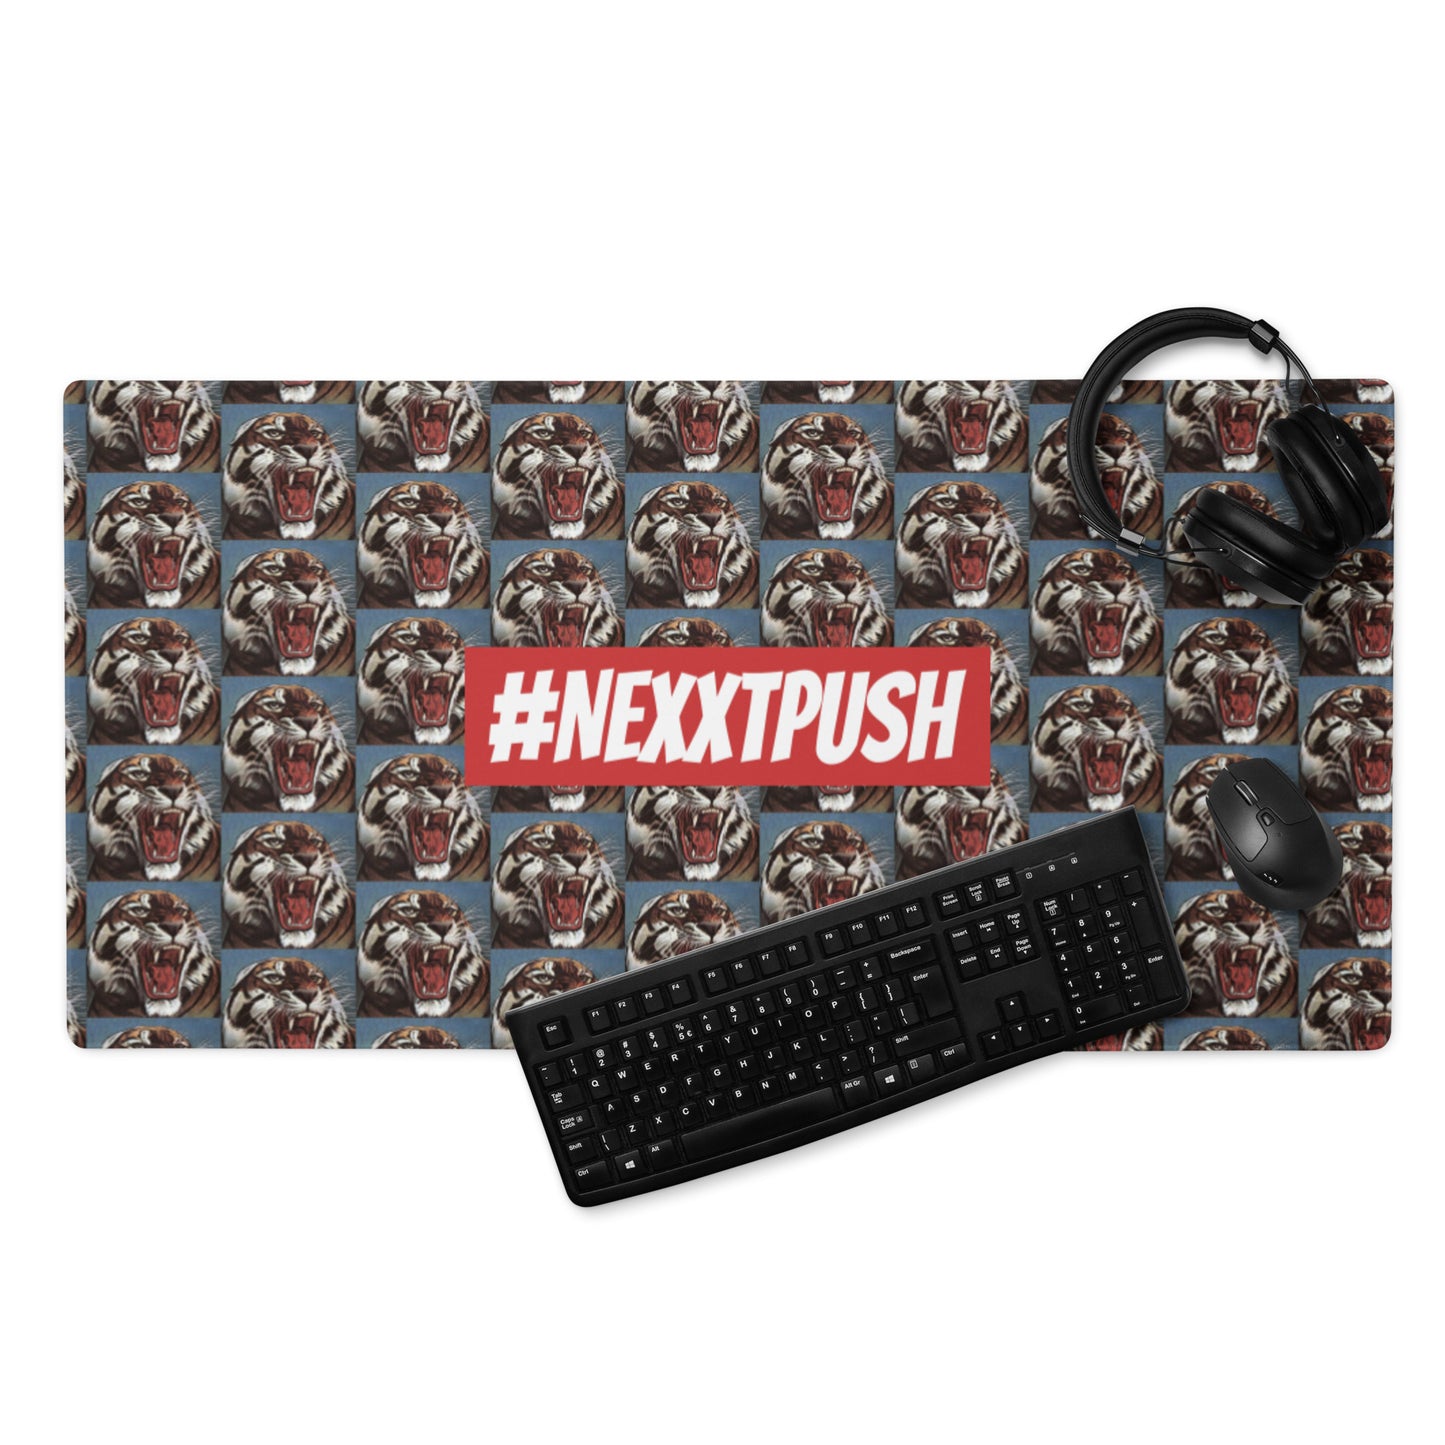 #Nexxtpush gaming mouse pad